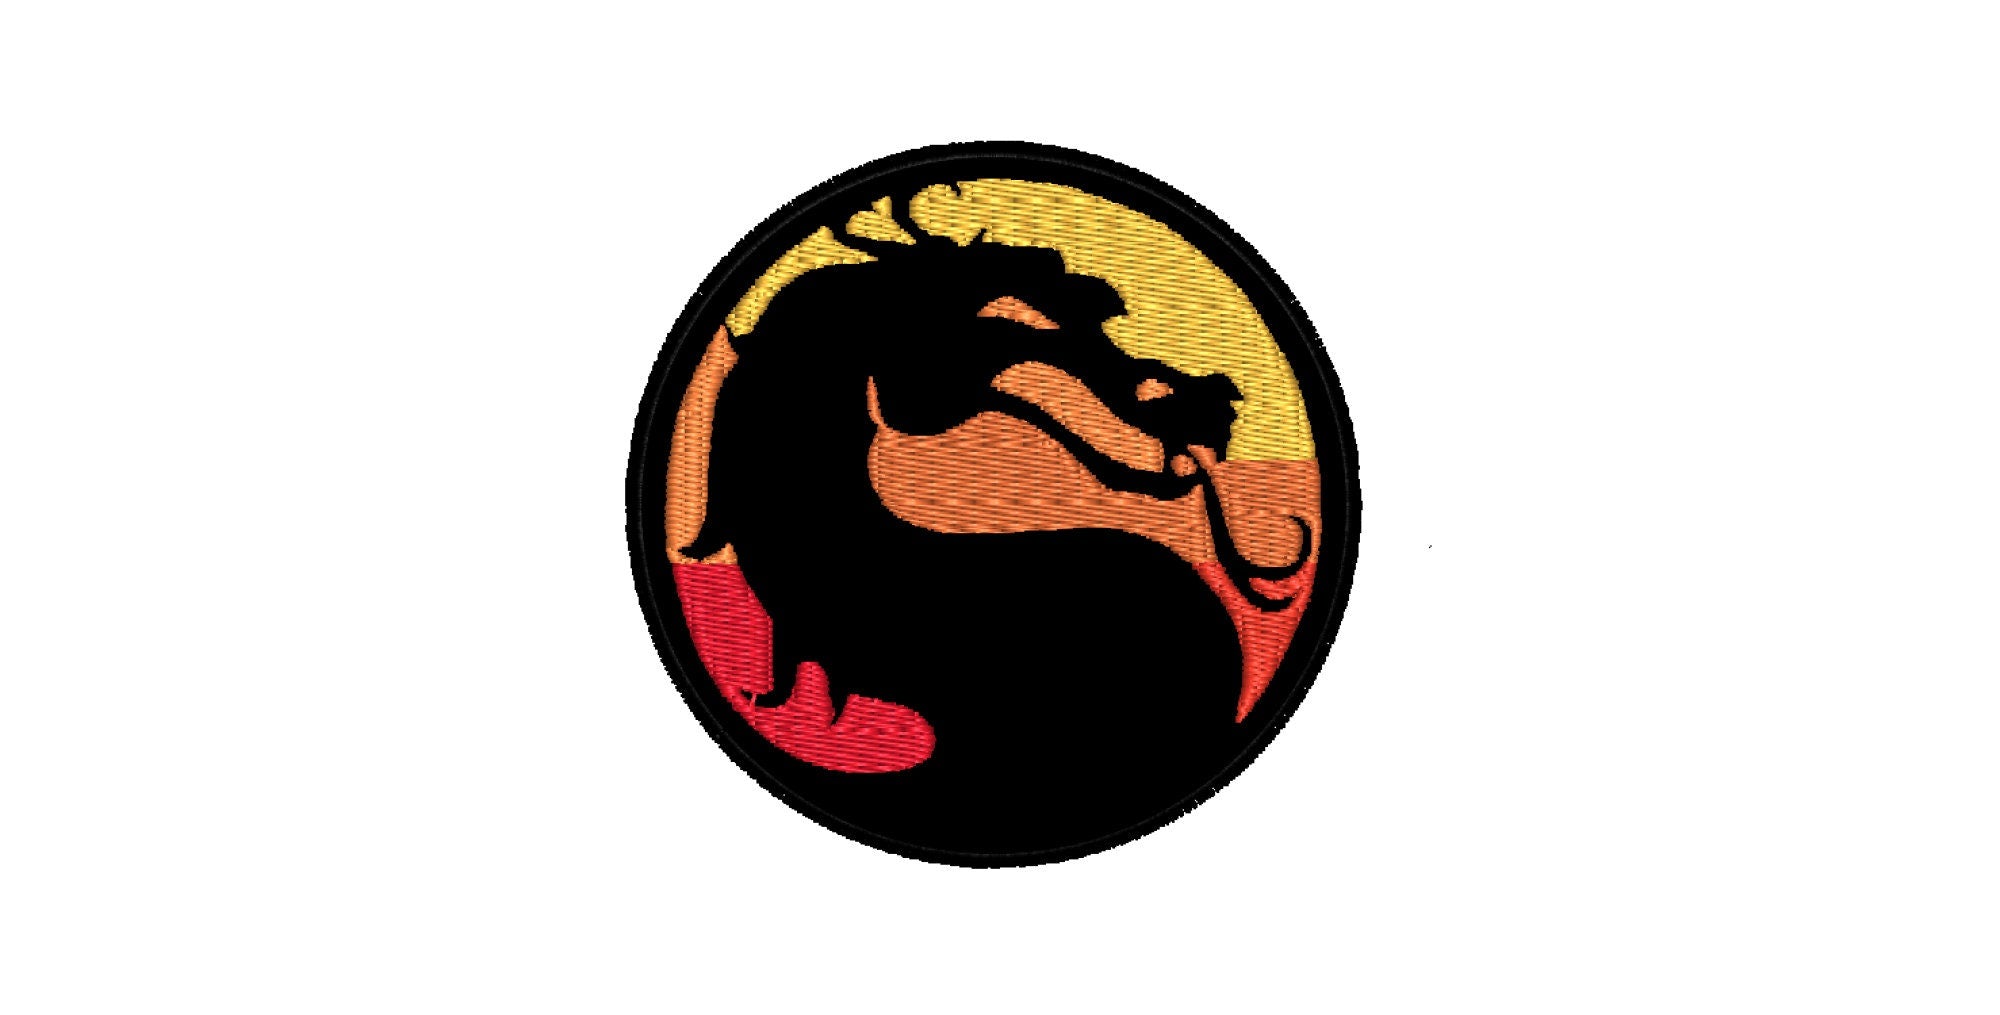 Mortal Kombat дракон. Mortal Kombat 1992 logo. Знак мортал комбат. Значок мортал комбат XL. Наклейки мортал комбат